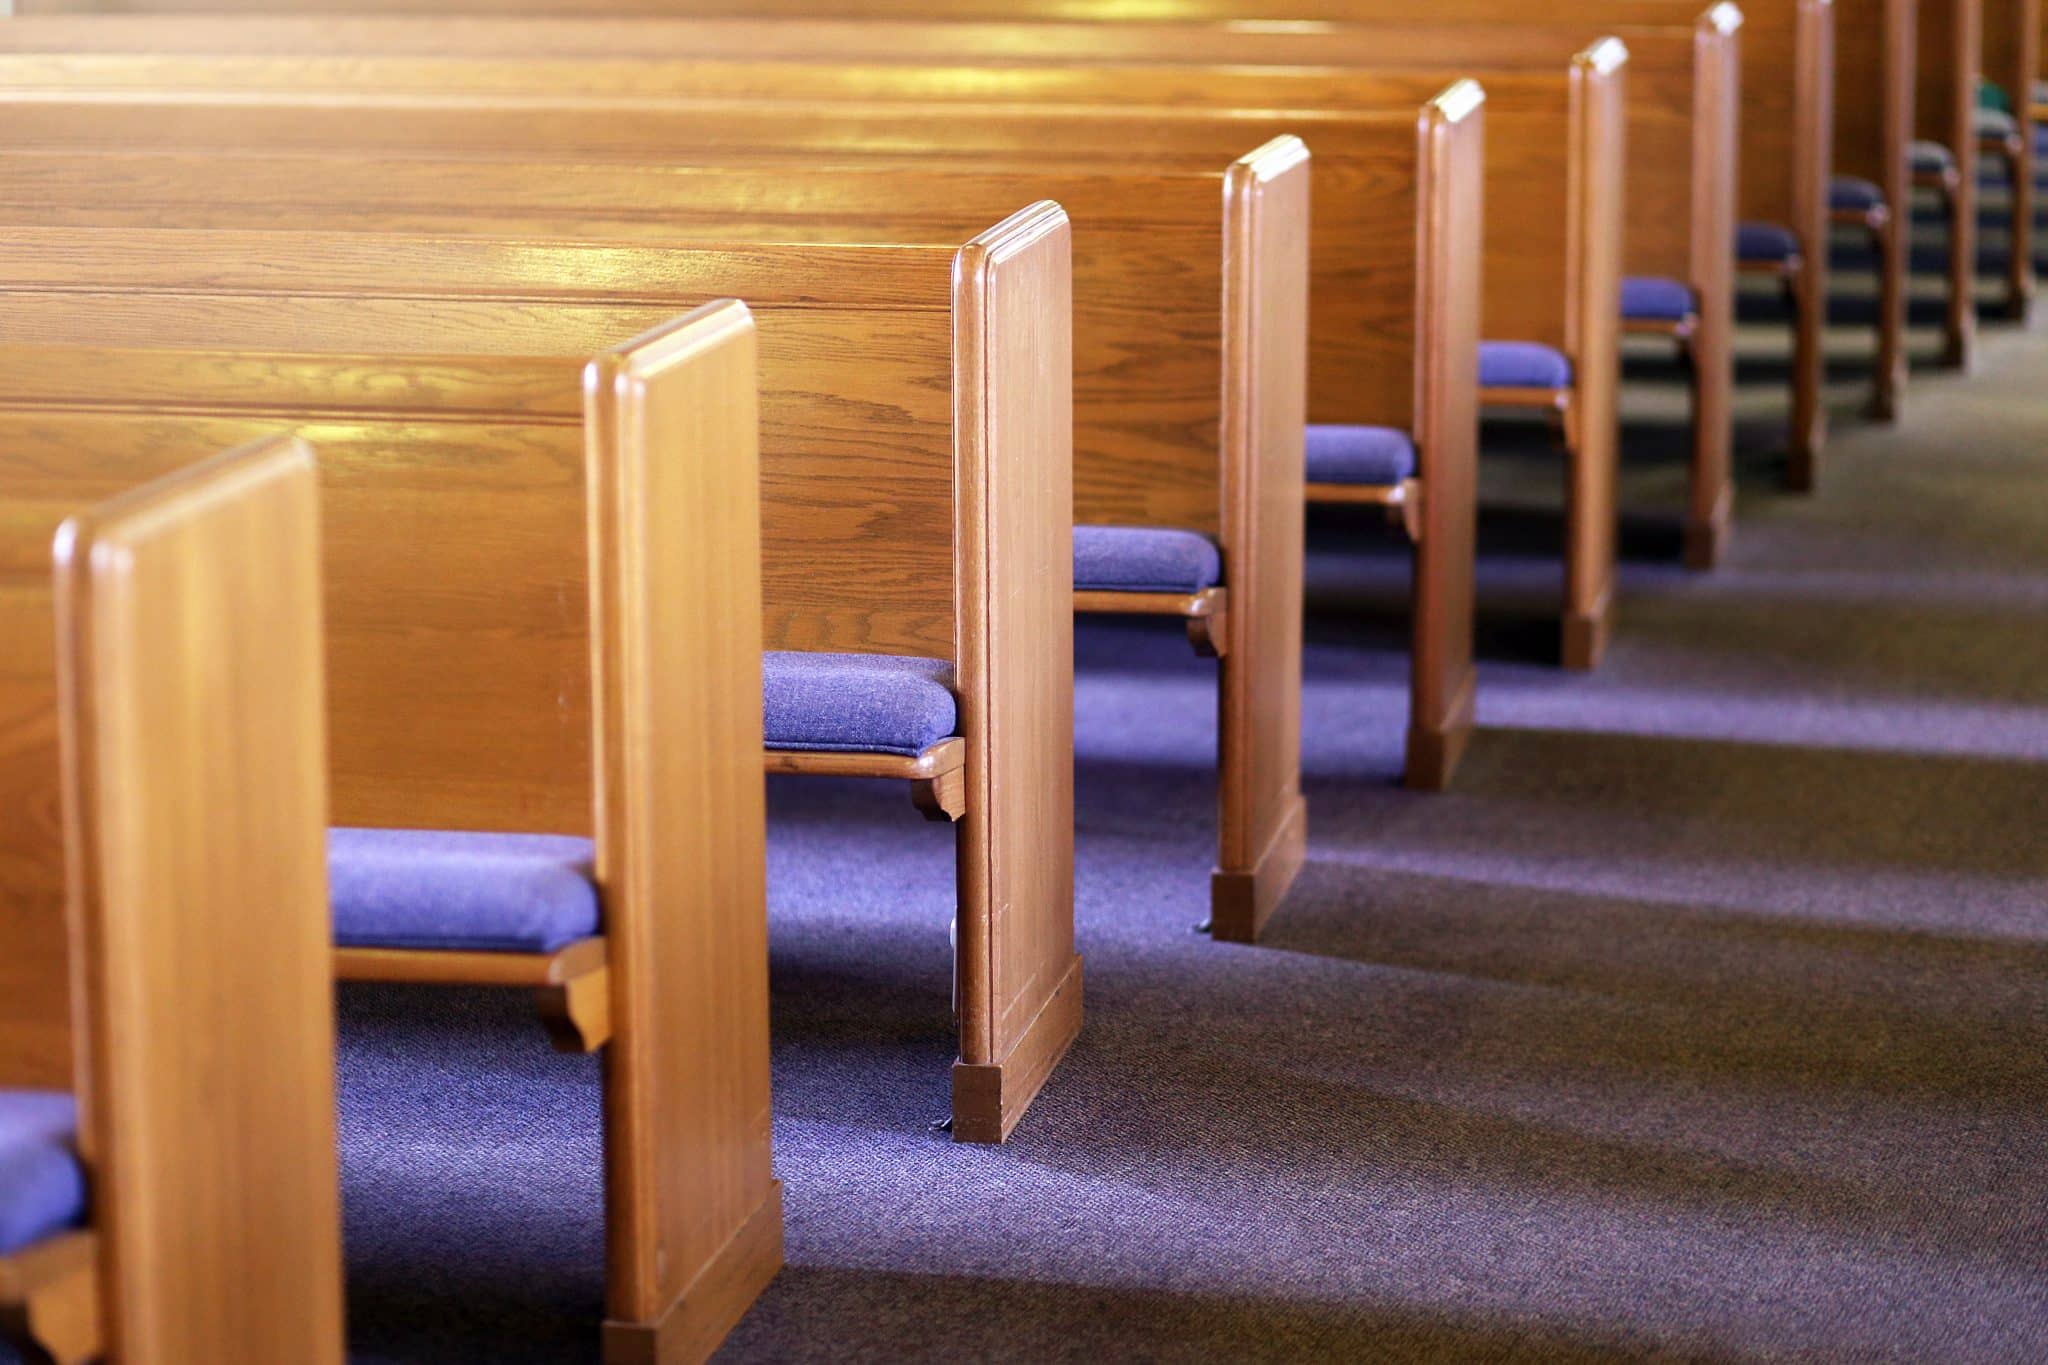 10 Telltale Signs of Bad Church Leadership